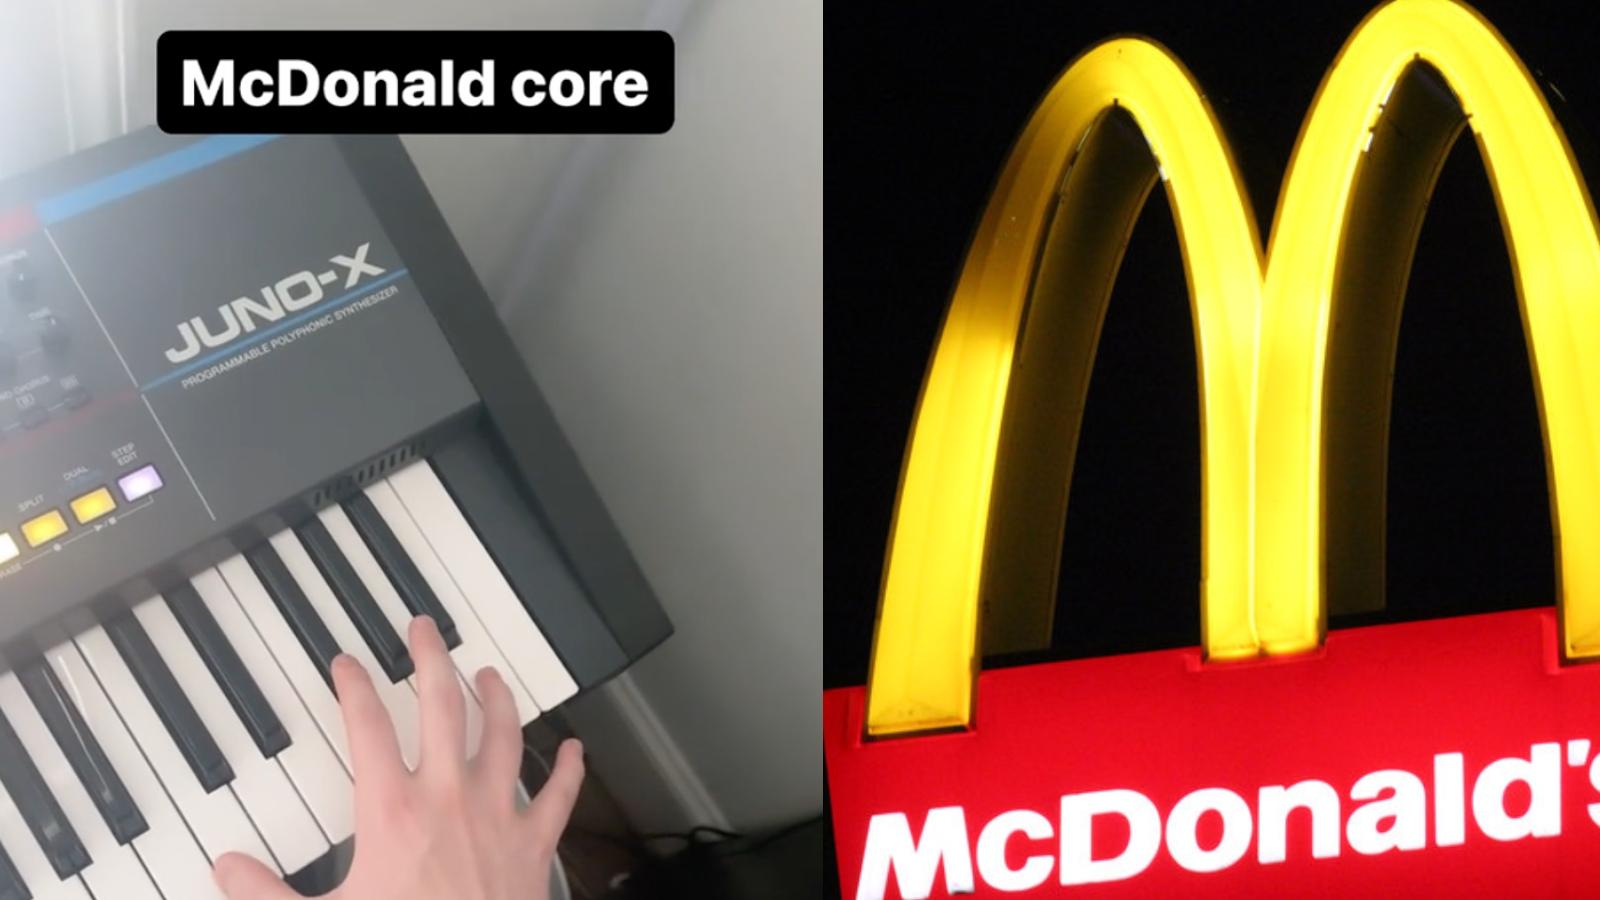 McDonald's tune